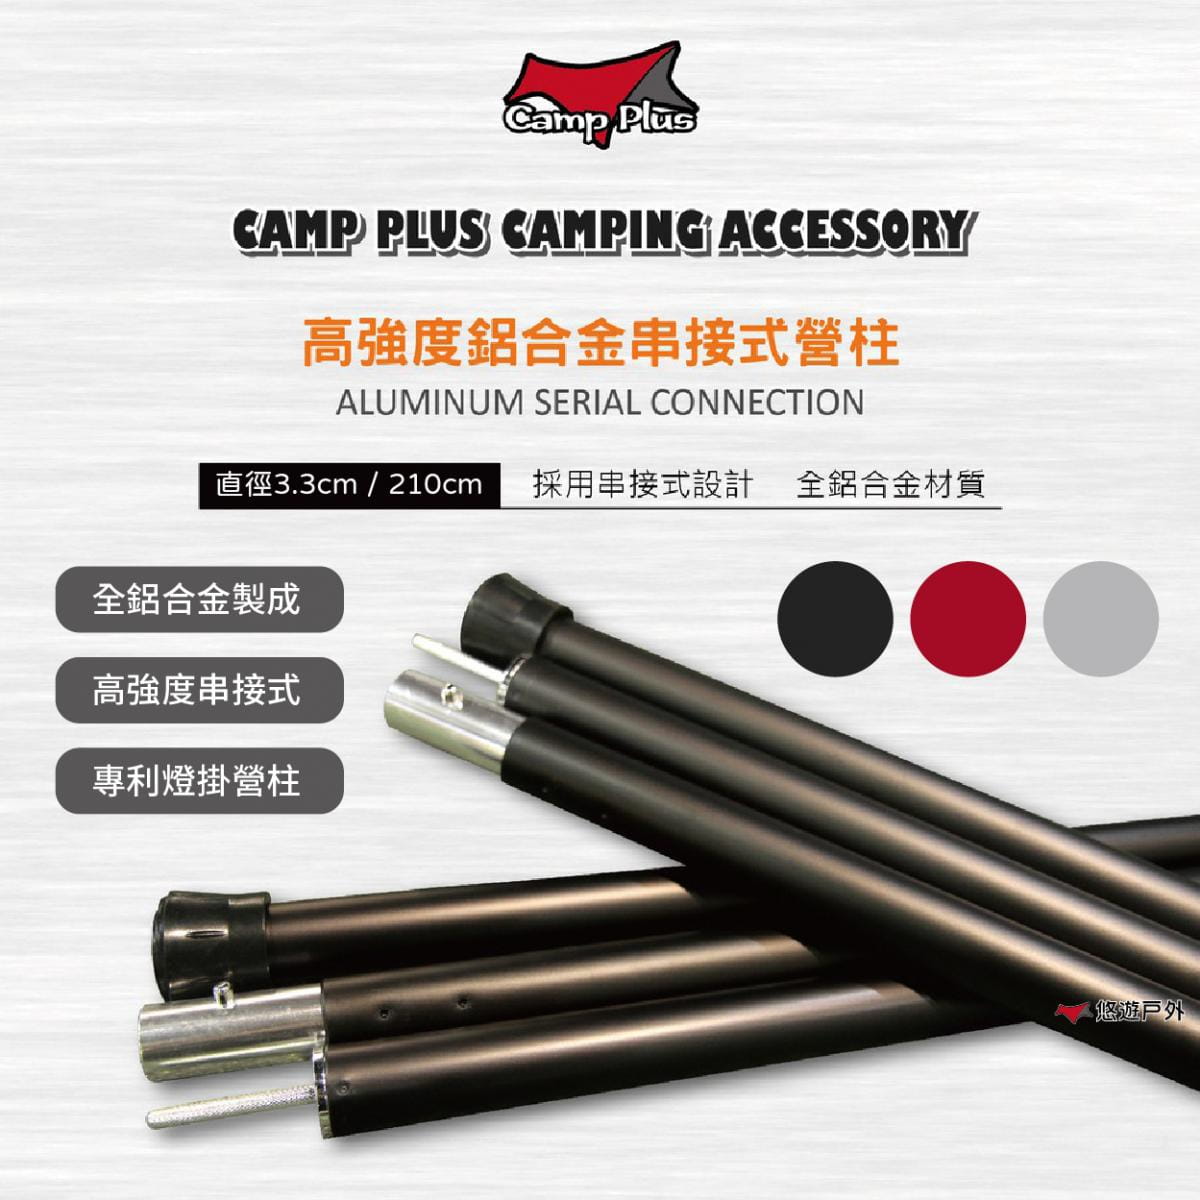 【Camp Plus】 專利燈掛營柱 210cm 霧黑 鋁合金專利營柱 33mm 高強度串接式 0